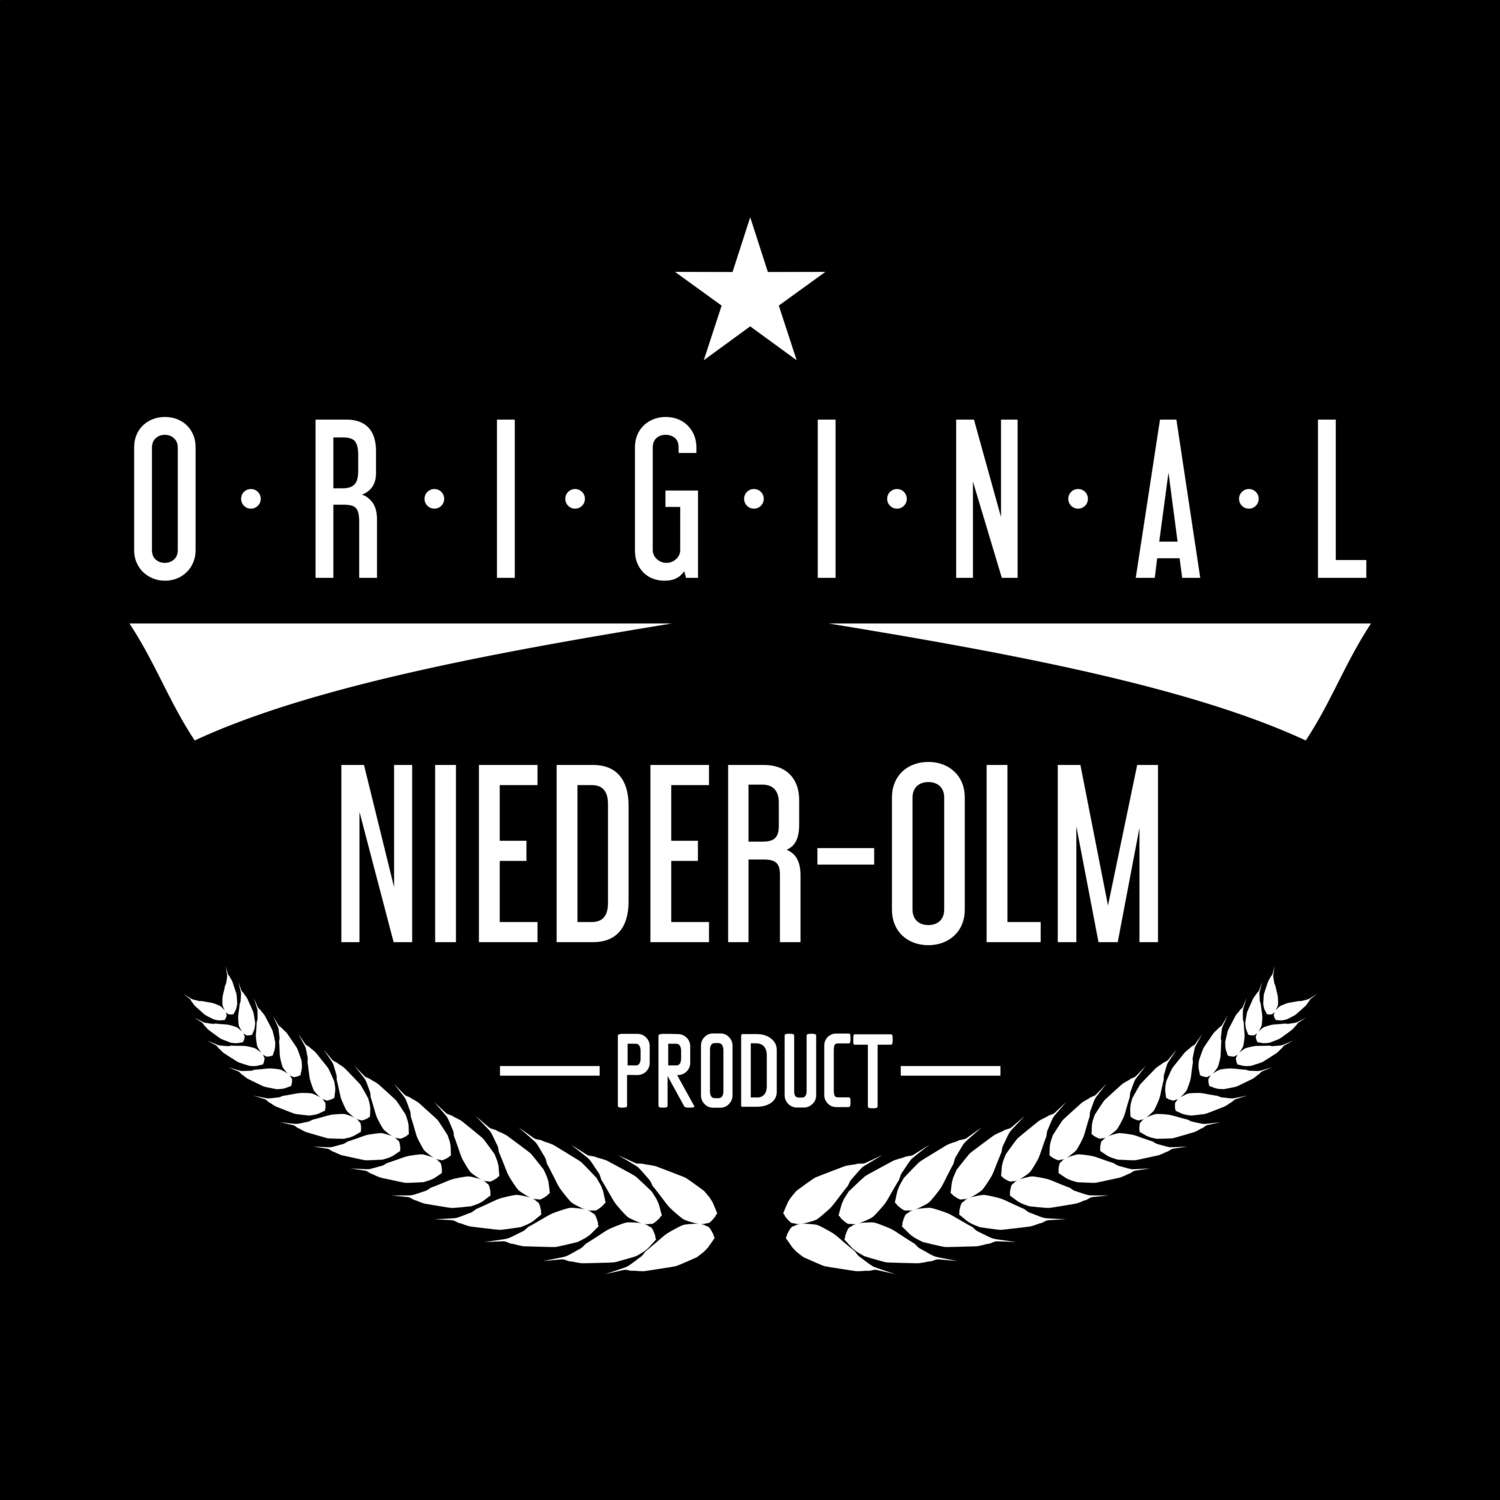 Nieder-Olm T-Shirt »Original Product«